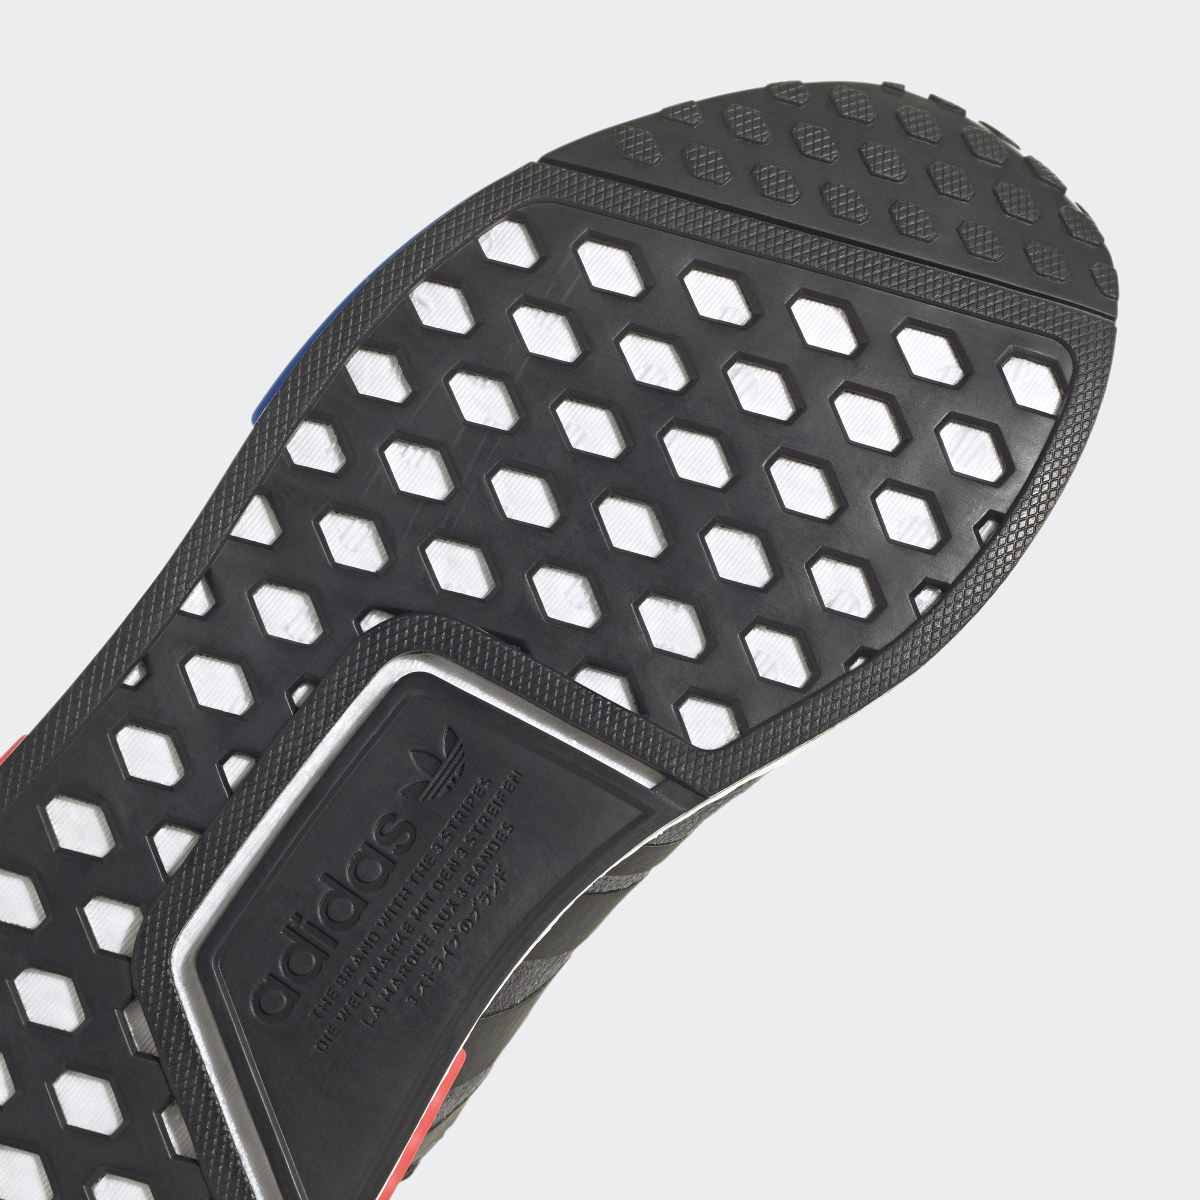 Adidas NMD_R1 Ayakkabı. 9